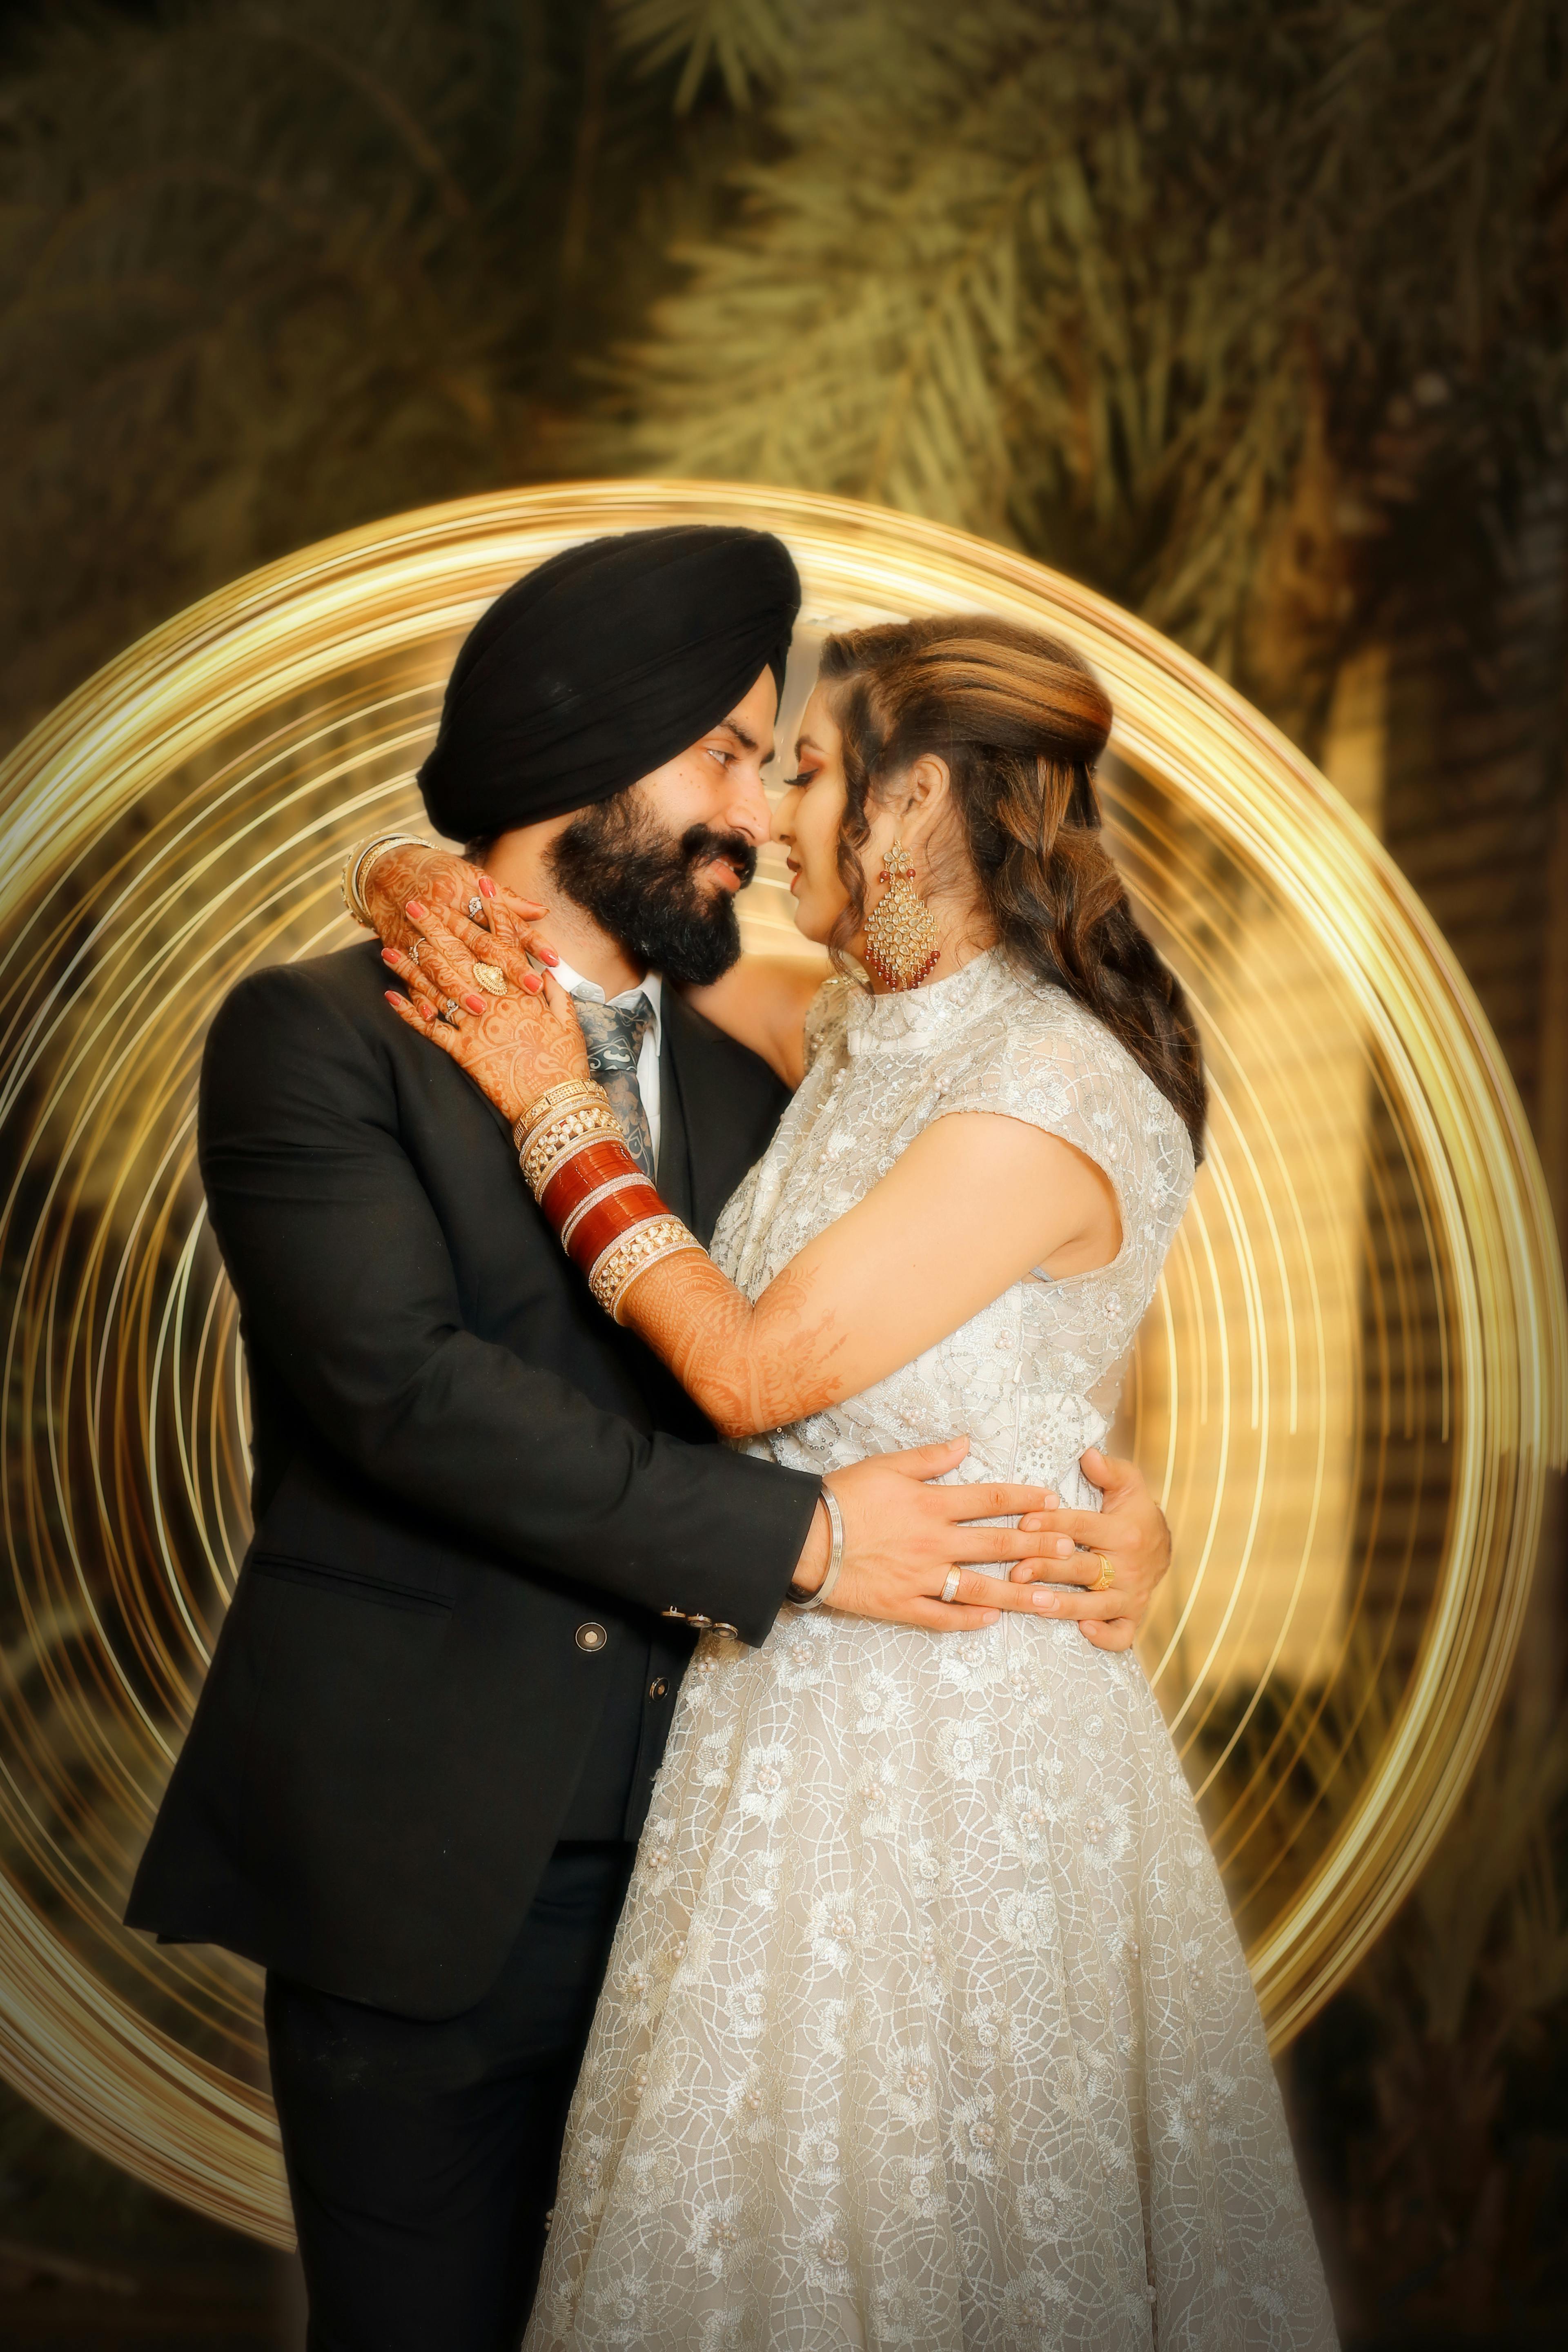 Pin by RAJWINDER KAUR on sardar g cm soon wai8ng 4 u | Indian wedding poses,  Indian wedding photography couples, Indian wedding photography poses